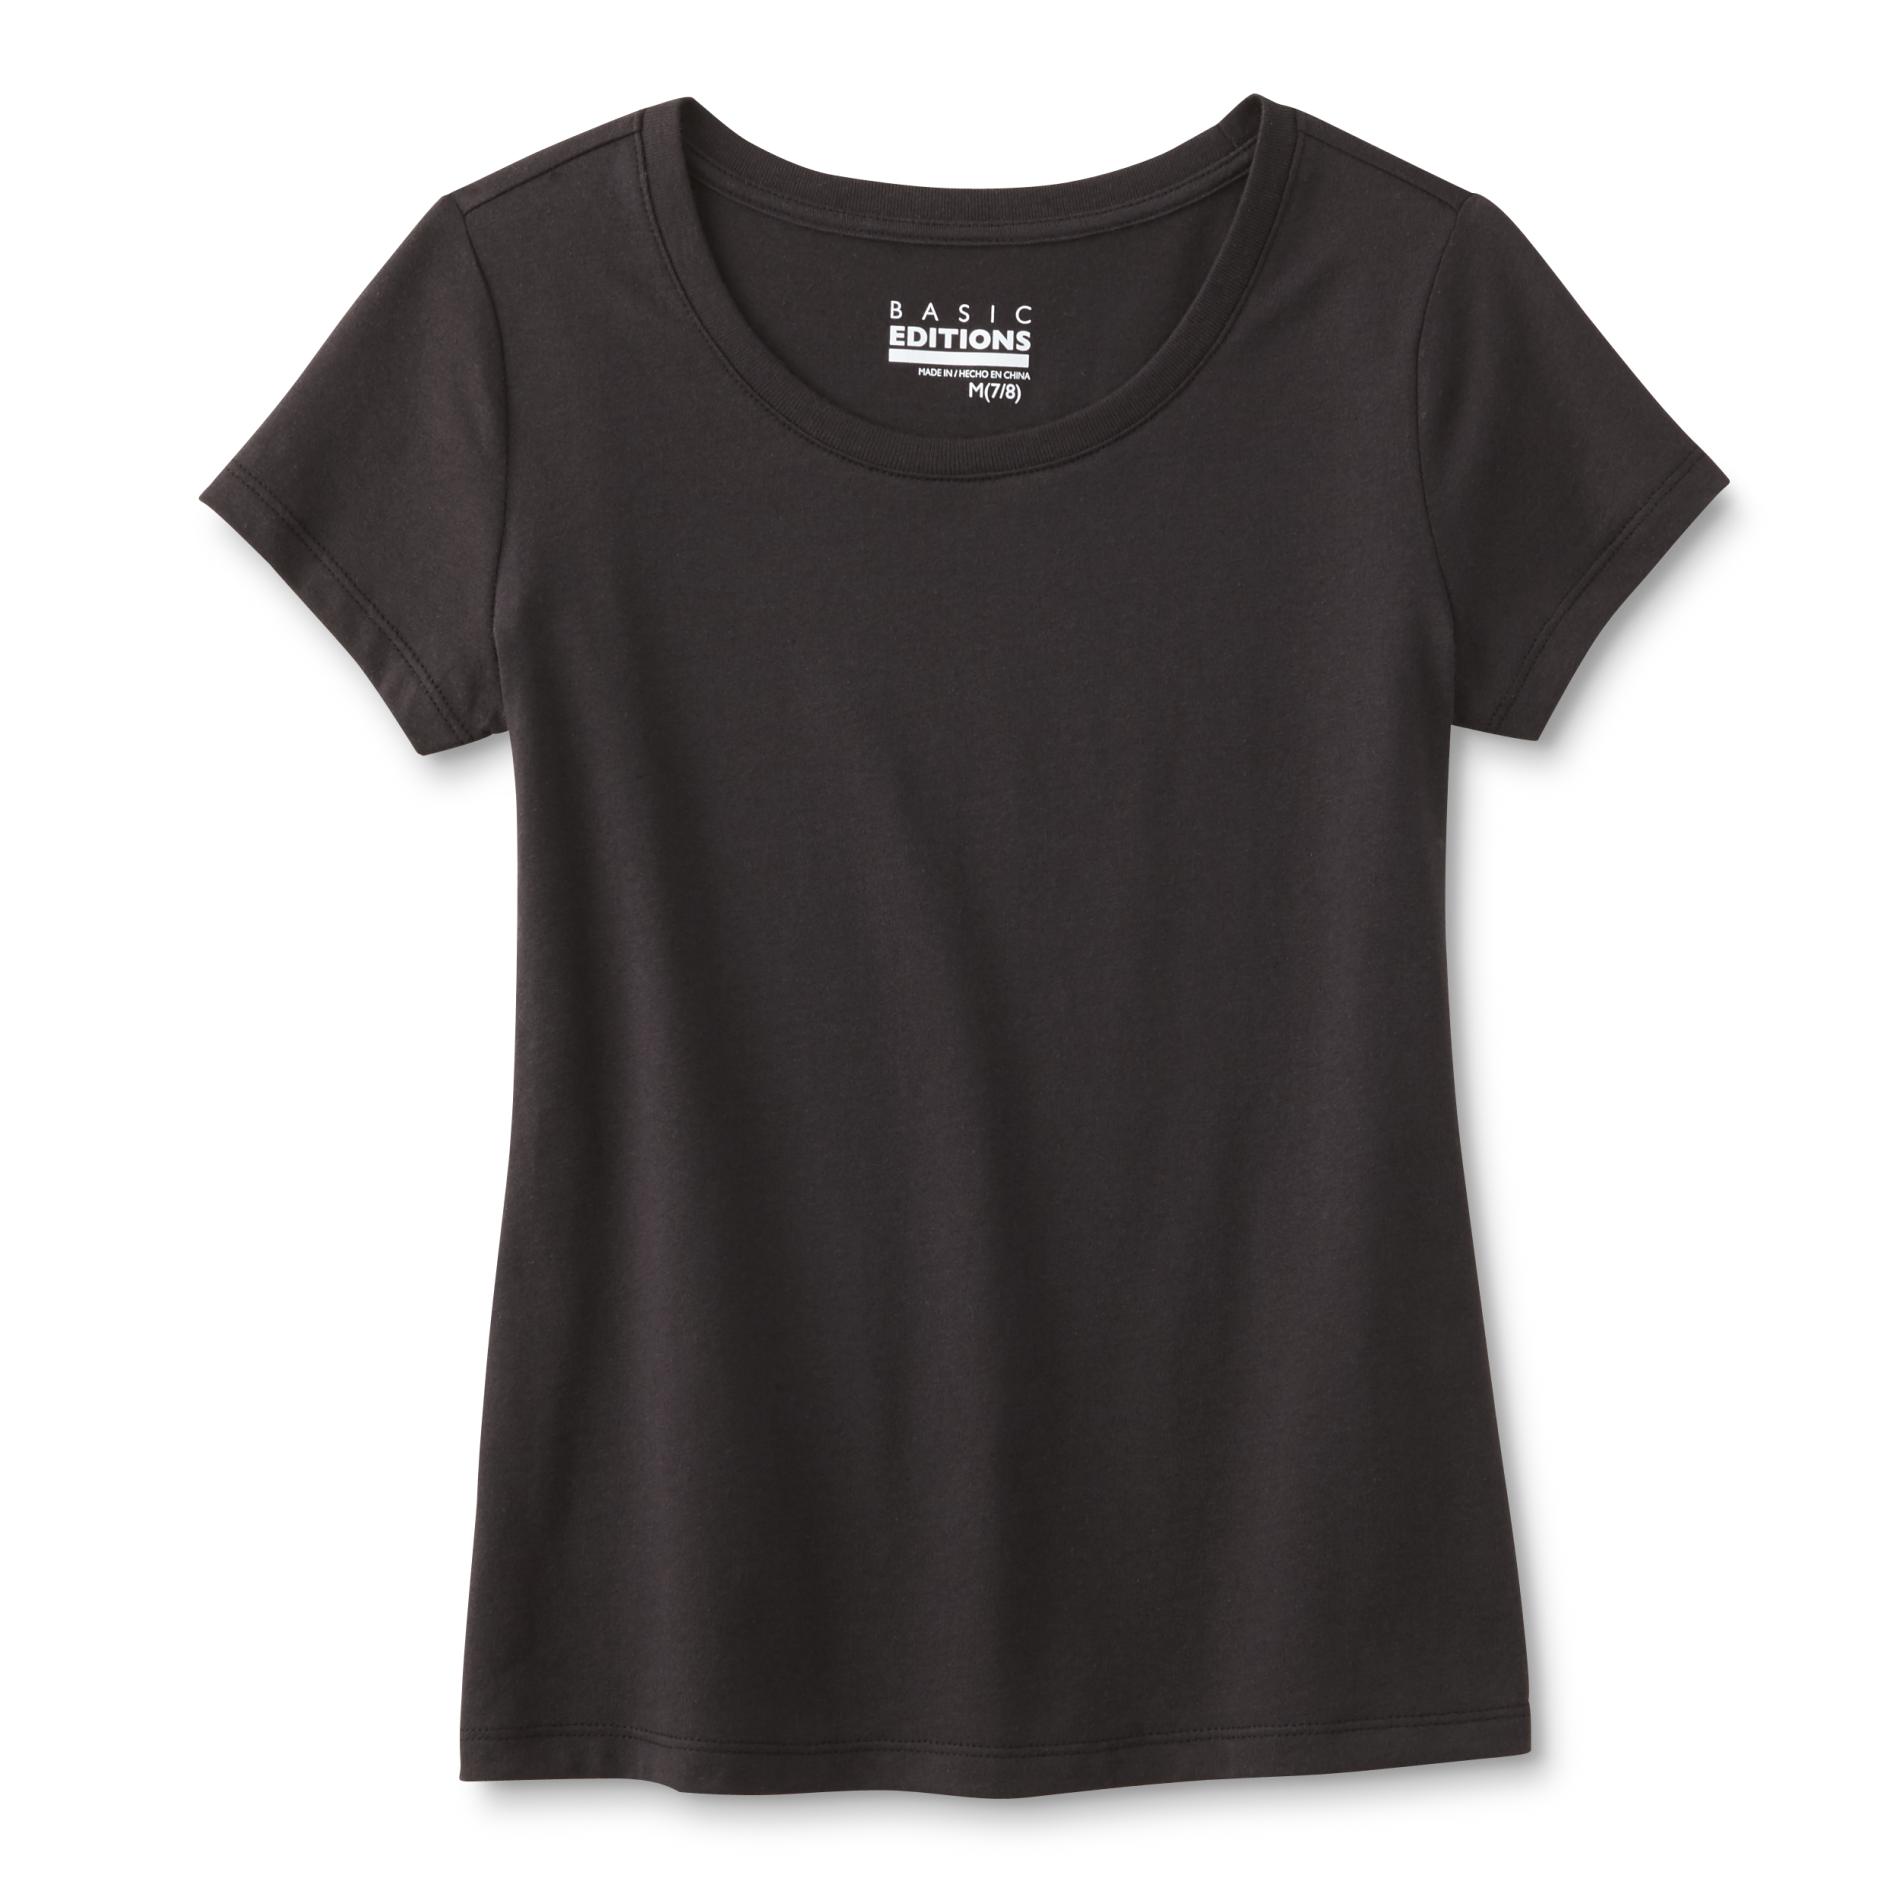 Basic Editions Girl's T-Shirt